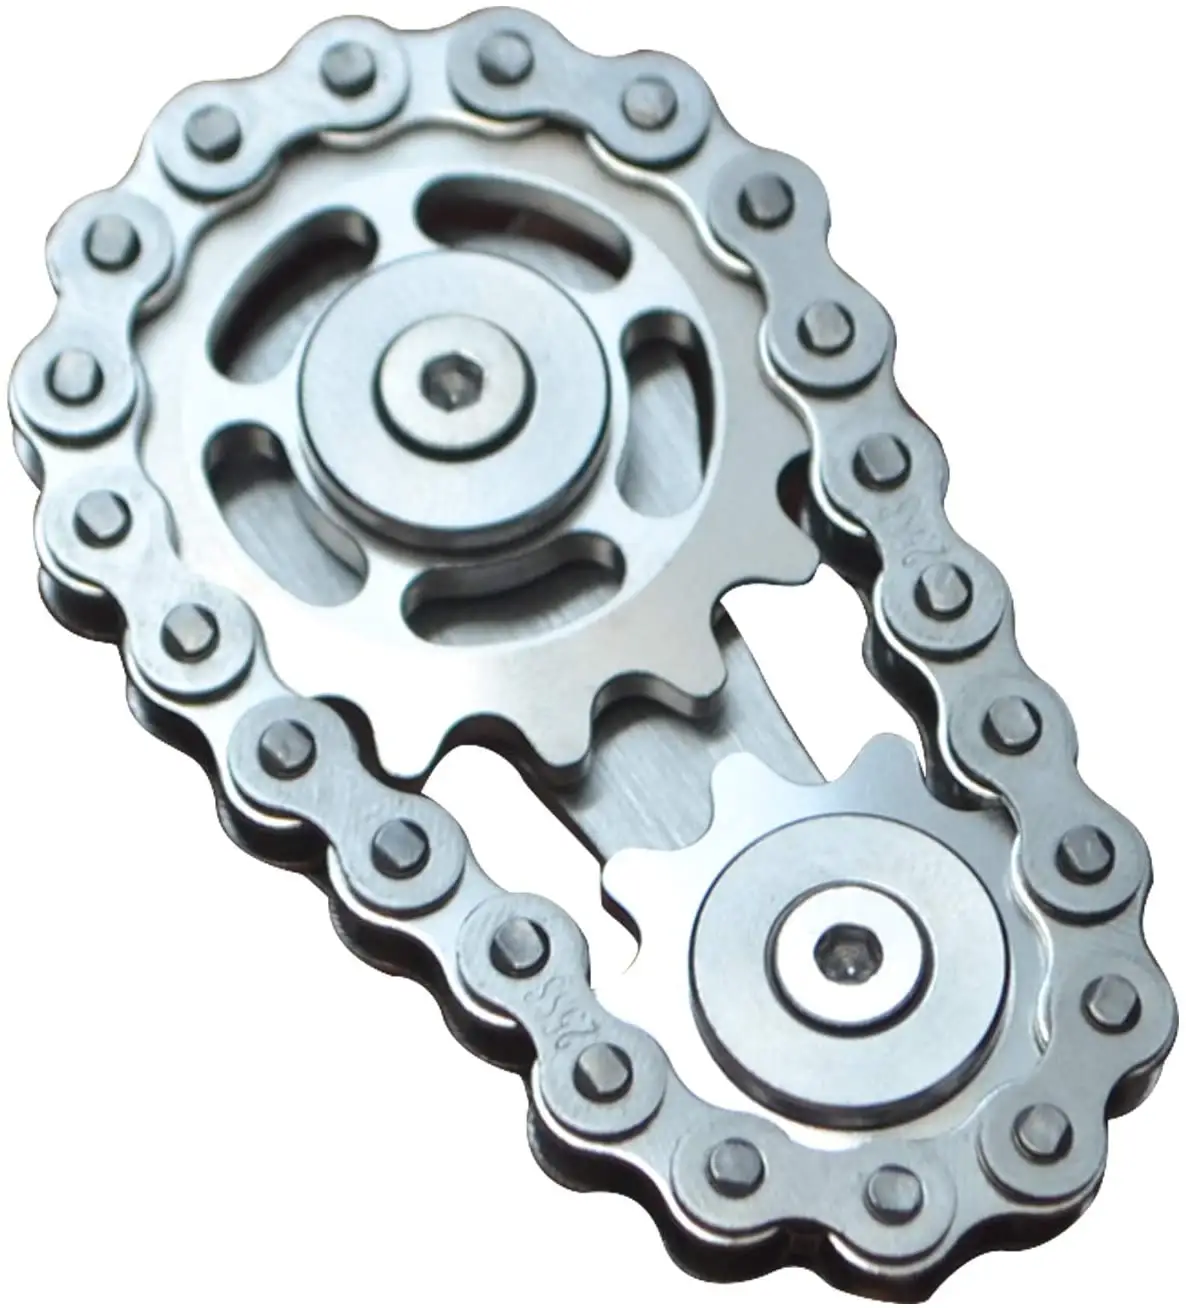 Gatwey Sprockets Chain Fidget Toys Metal Sensory Bike Chain Gears Fidgets Spinner for Adults EDC Novelty Toy Pack Pocket Size